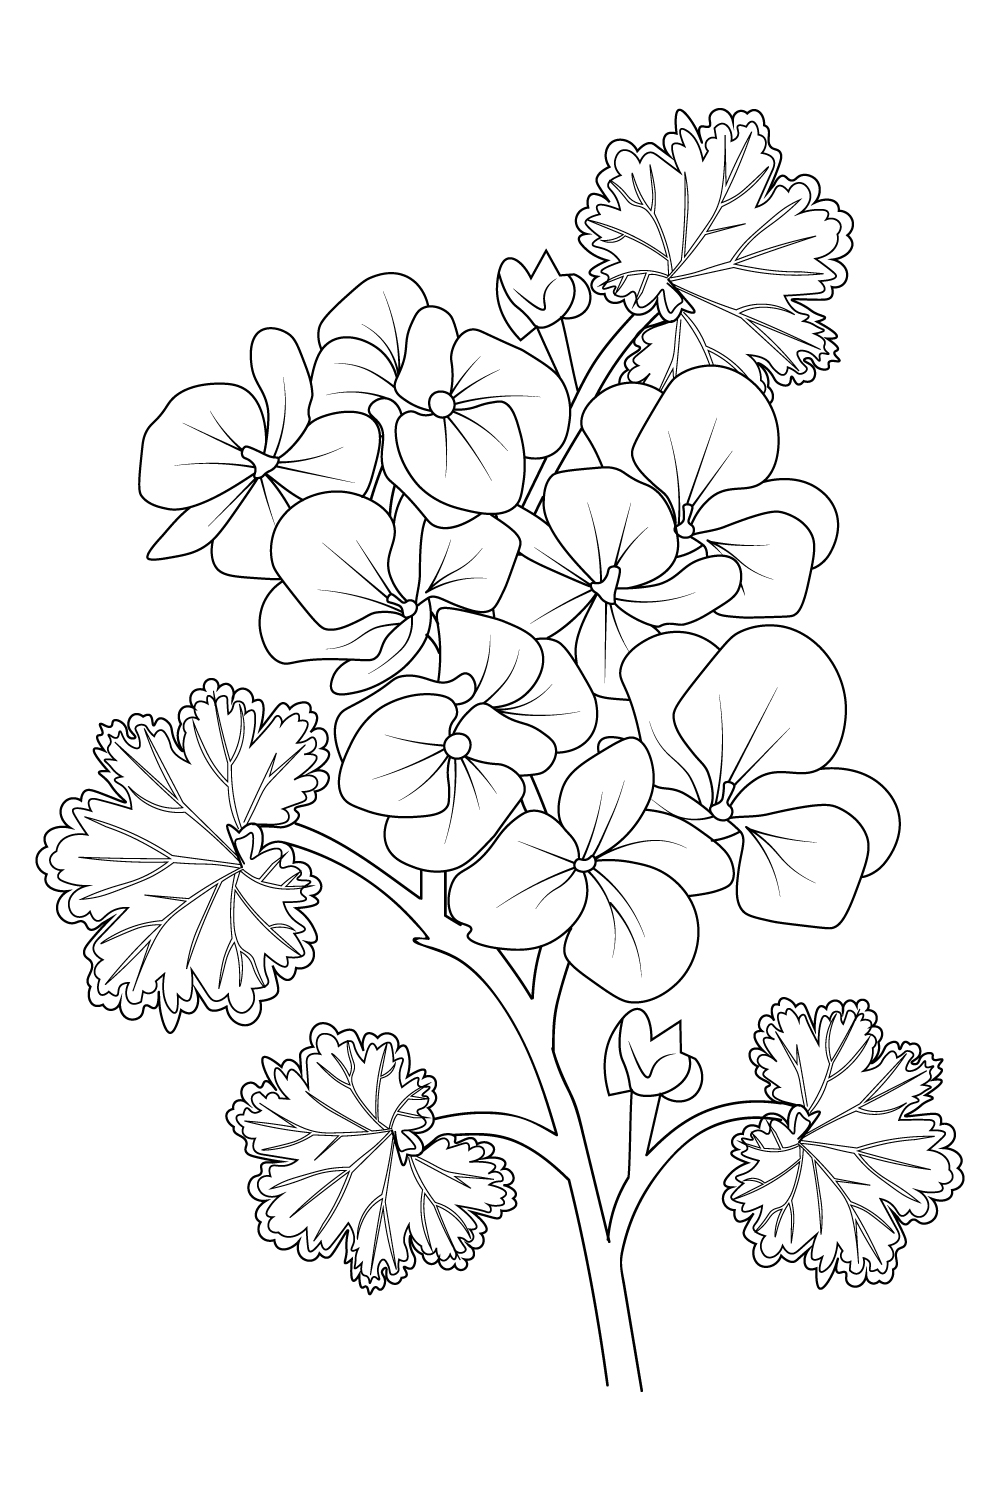 black geranium tattoo, black and white geranium flower tattoo, wild geranium drawing, drawing geranium sketch, Realistic flower coloring pages, vintage floral vector illustration pinterest preview image.